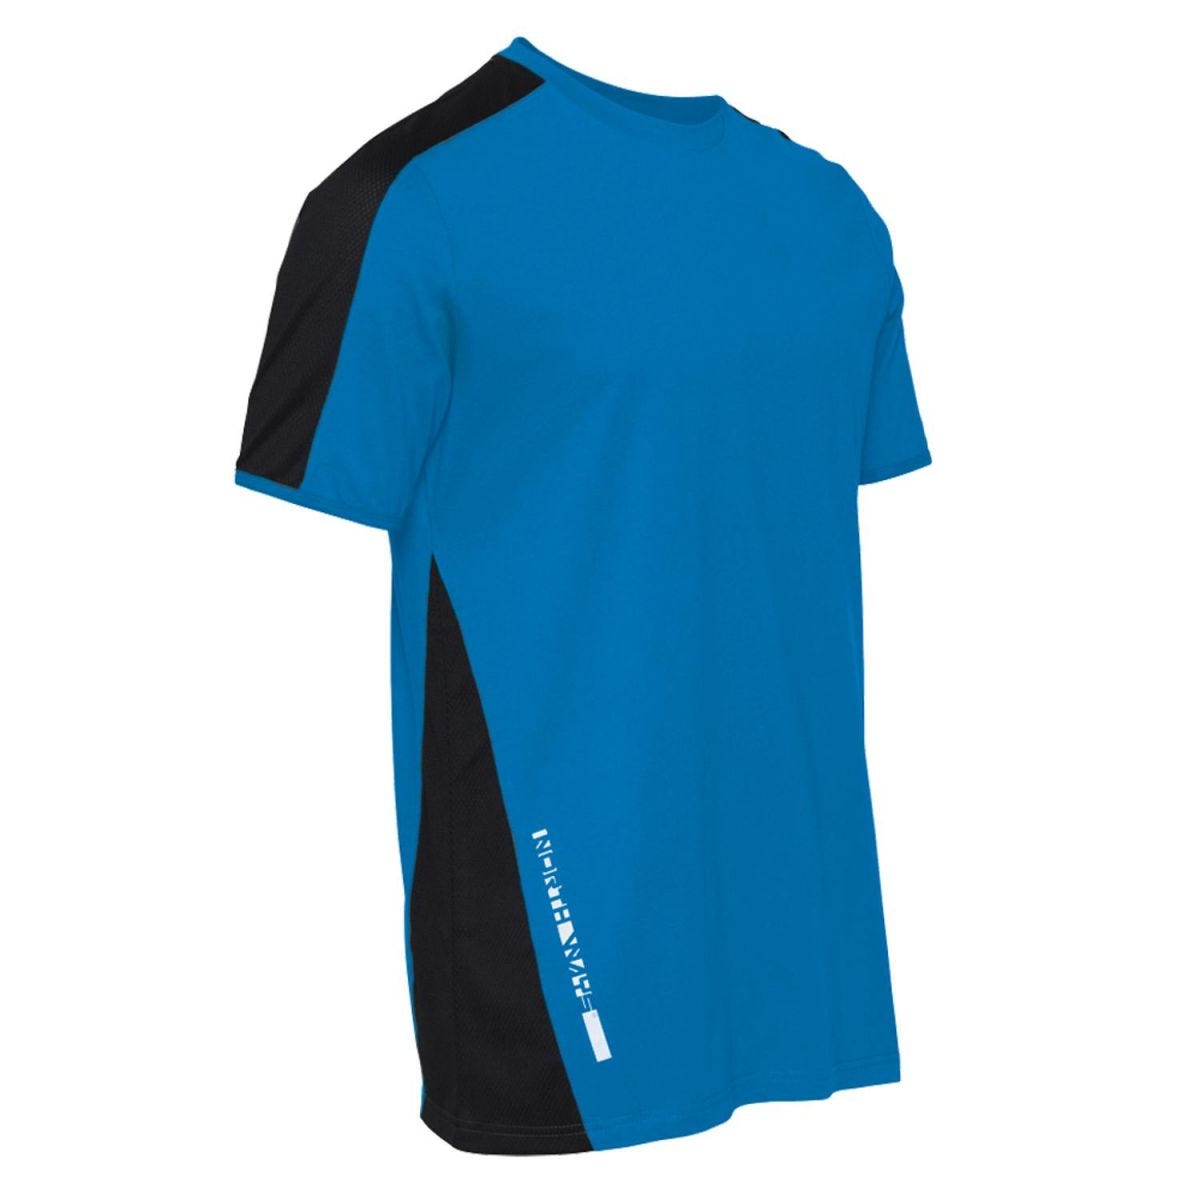 Tee-shirt à manches courtes pour homme Andy bleu - North Ways - Taille 2XL 2